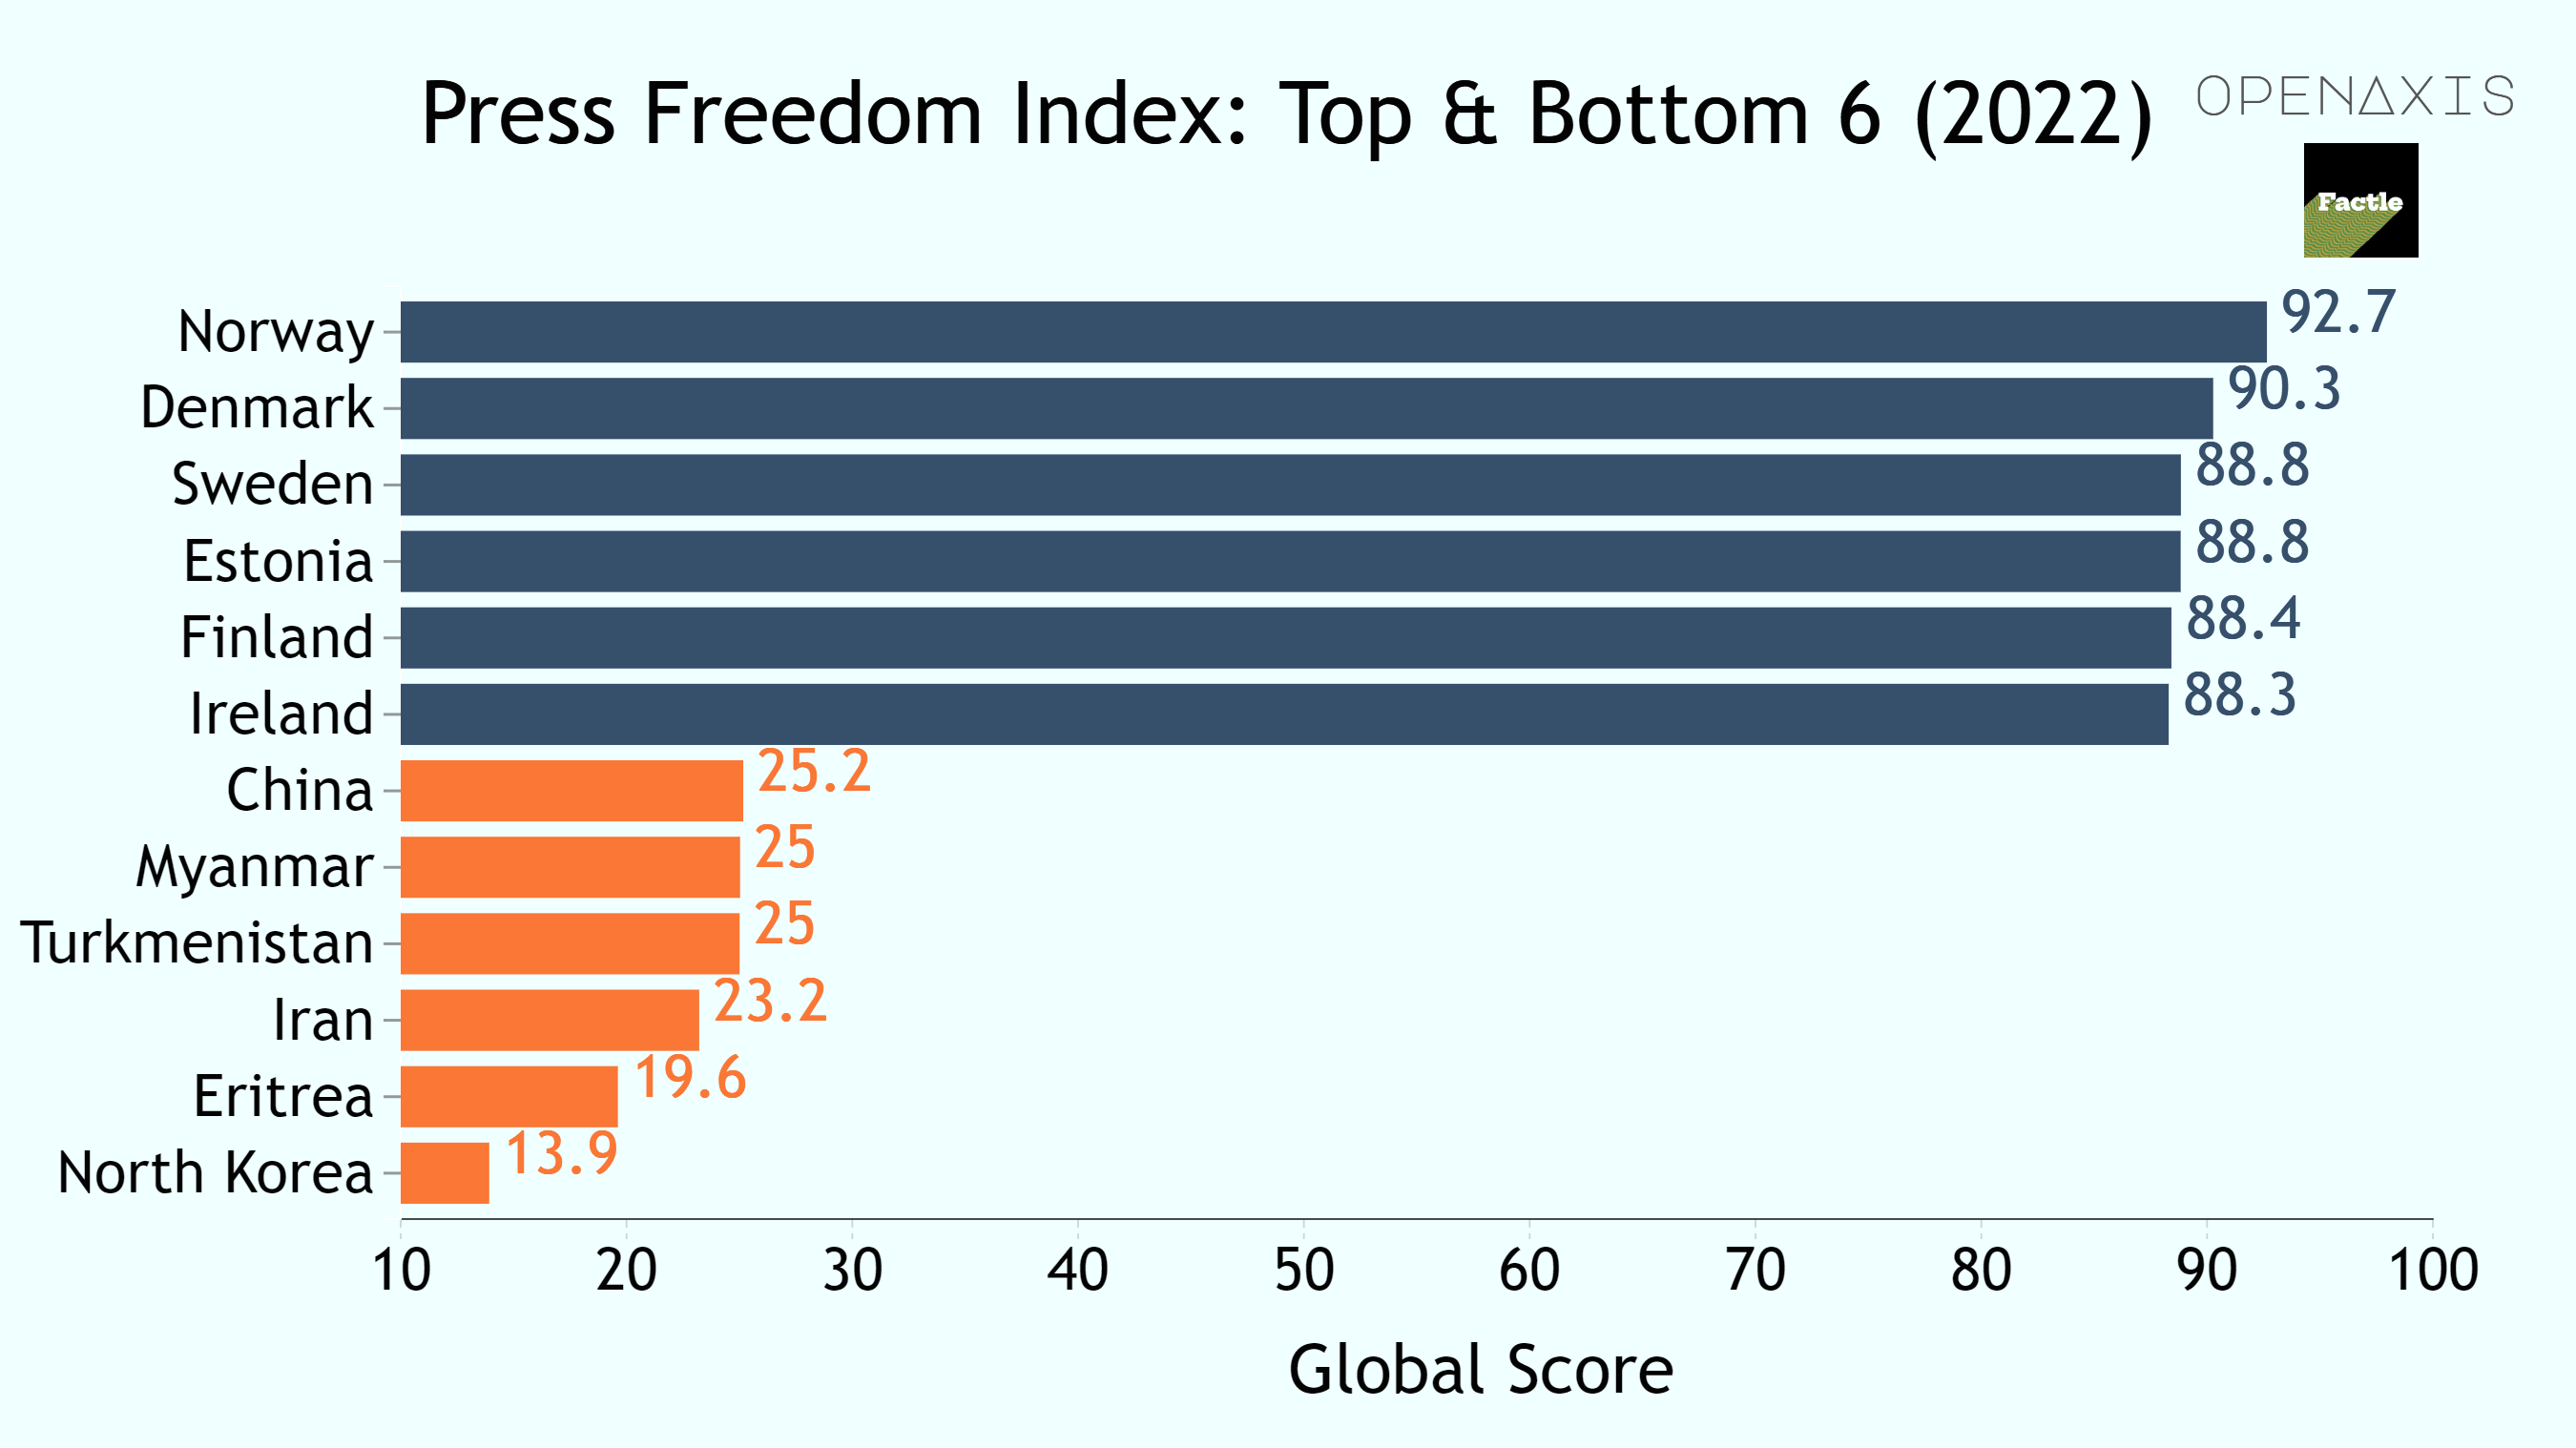 "Press Freedom Index: Top & Bottom 6 (2022)"